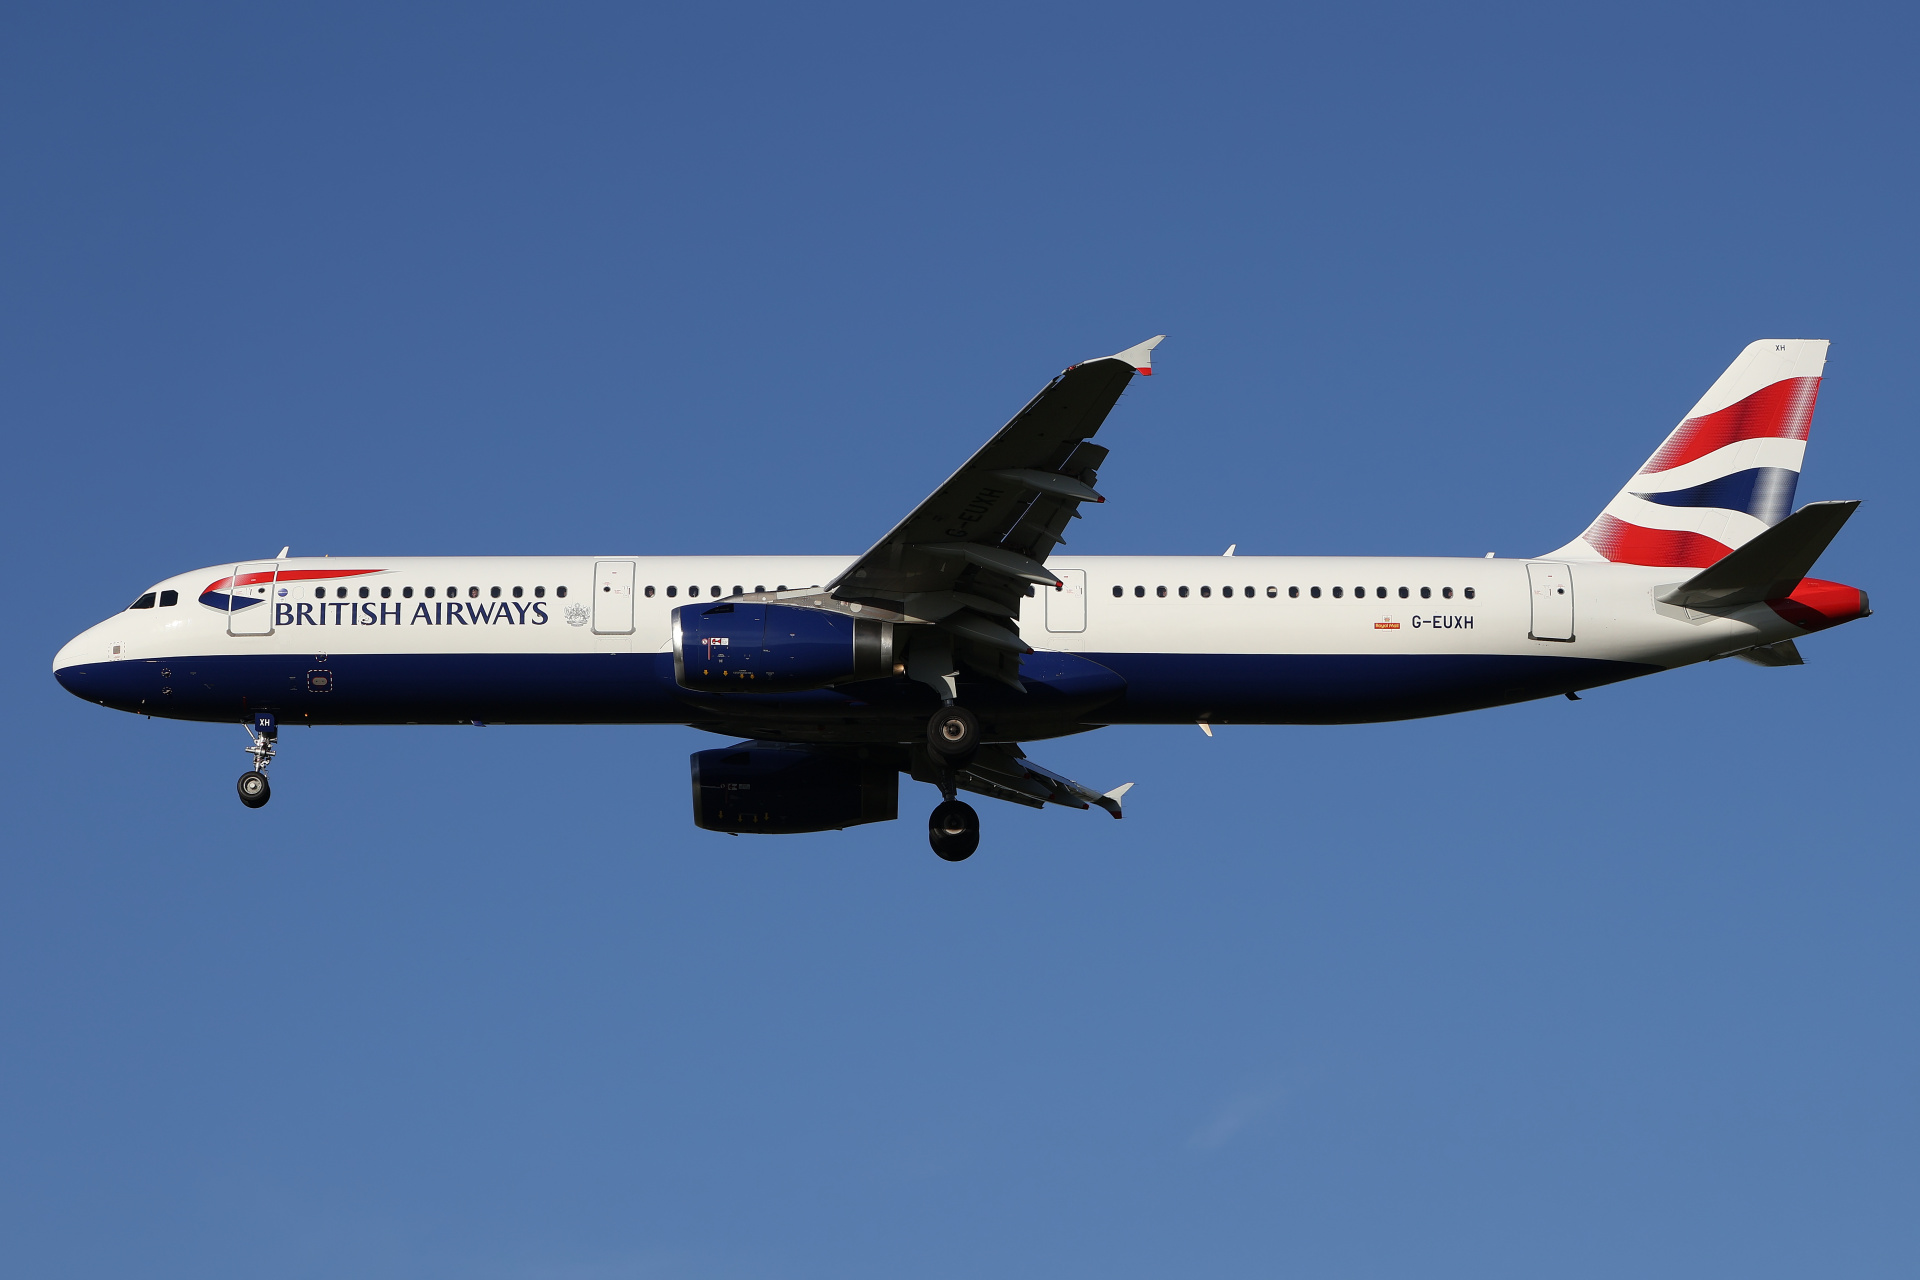 G-EUXH (Aircraft » EPWA Spotting » Airbus A321-200 » British Airways)